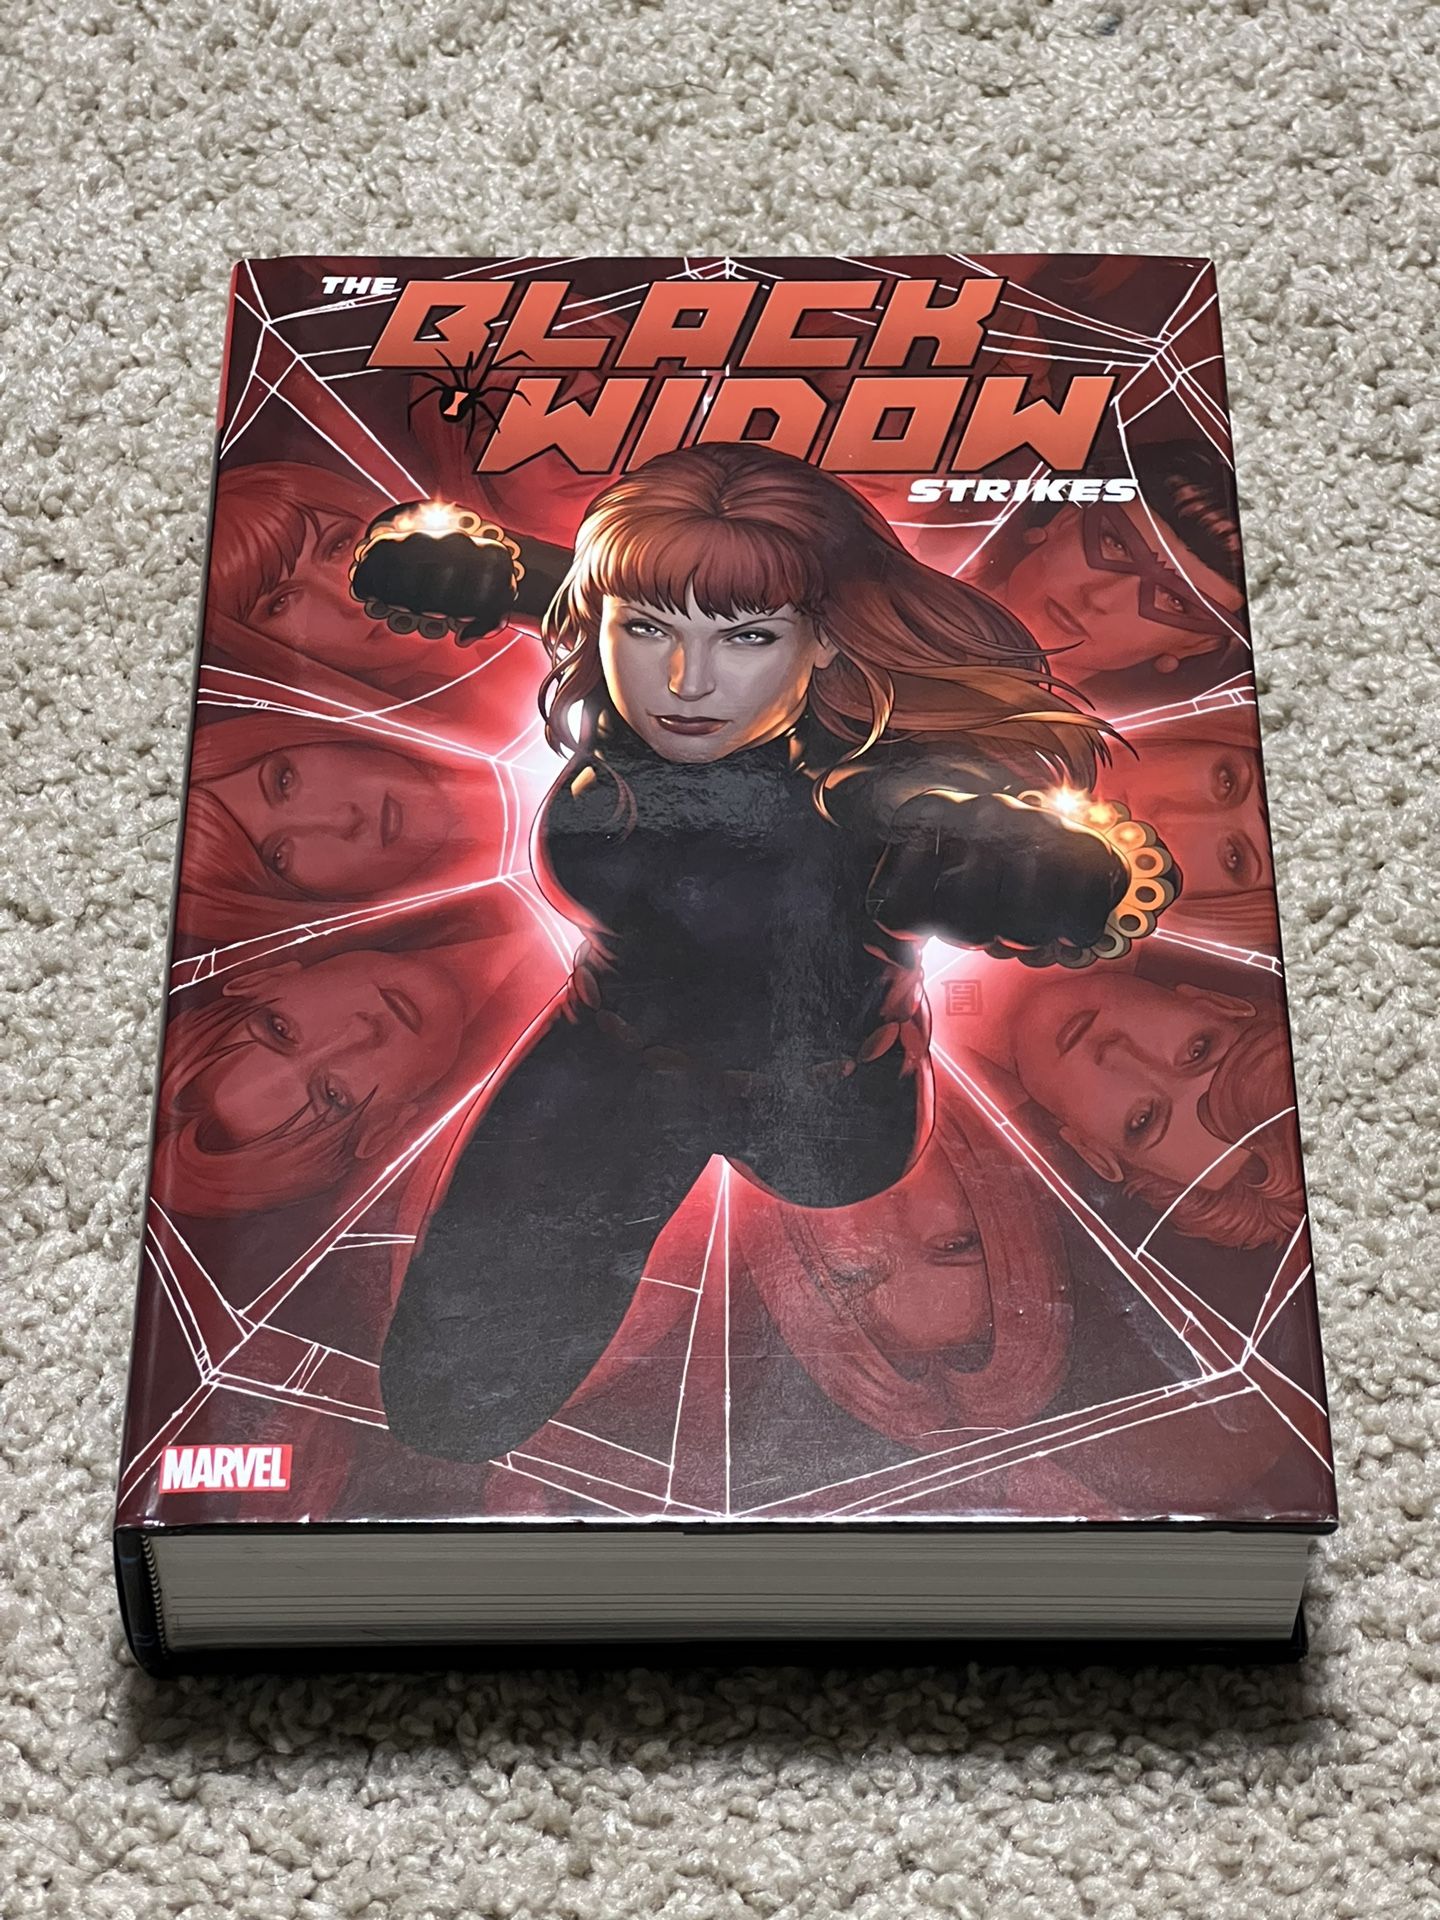 The Black Widow Strikes Omnibus (Marvel Comics)